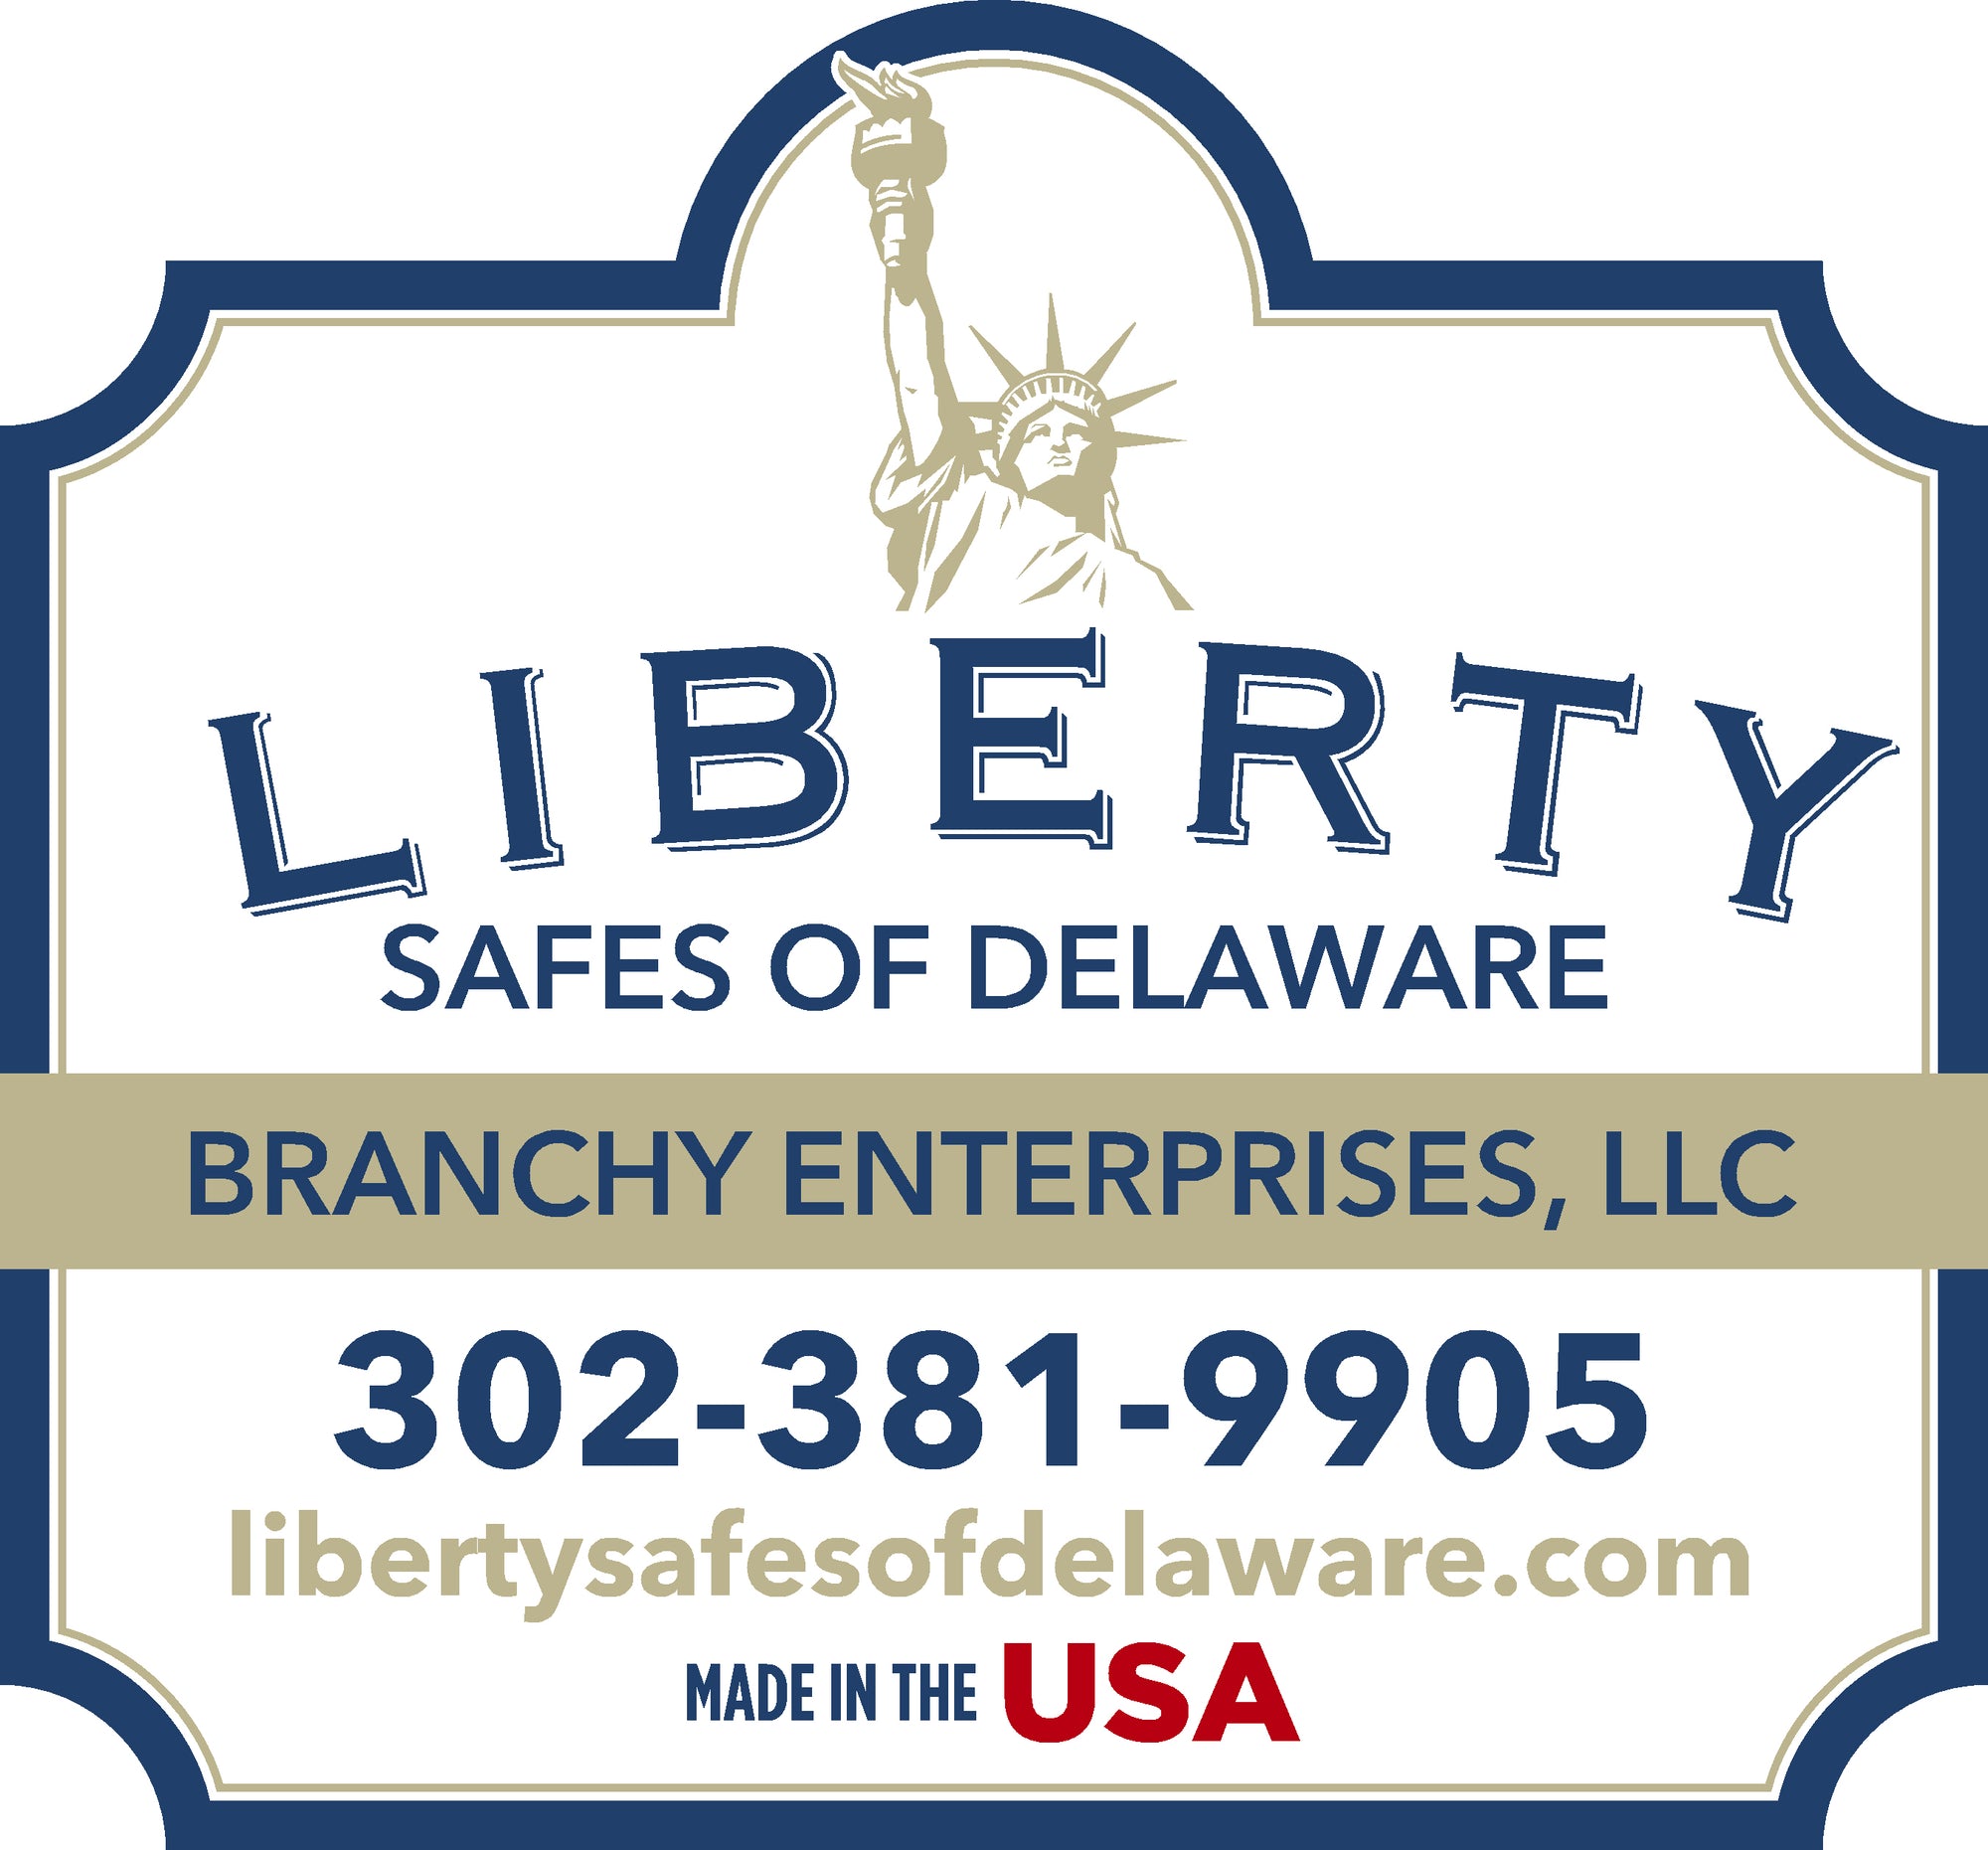 Liberty Safes of Delaware Branchy Enterprises